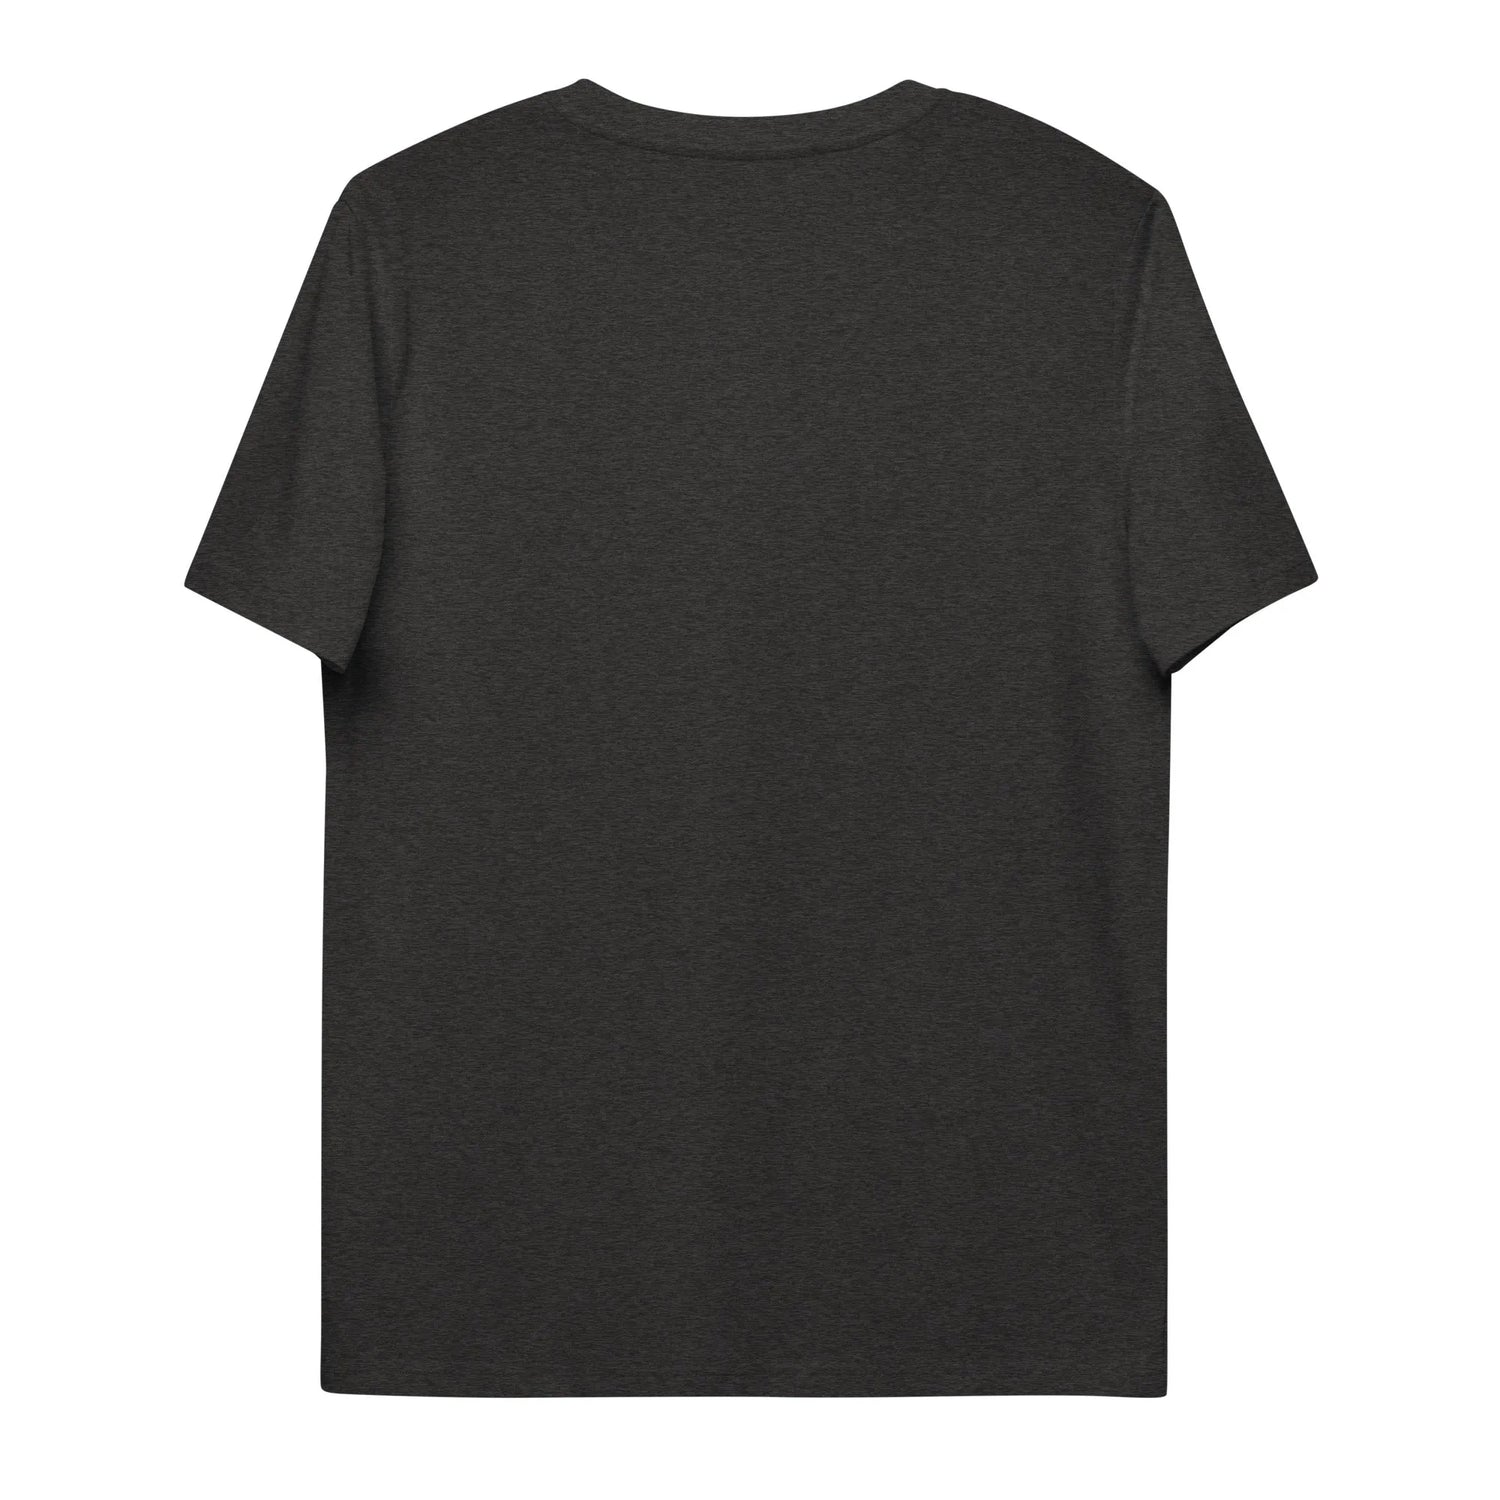 T-shirt in cotone organico WINGS (grigio melange scuro)